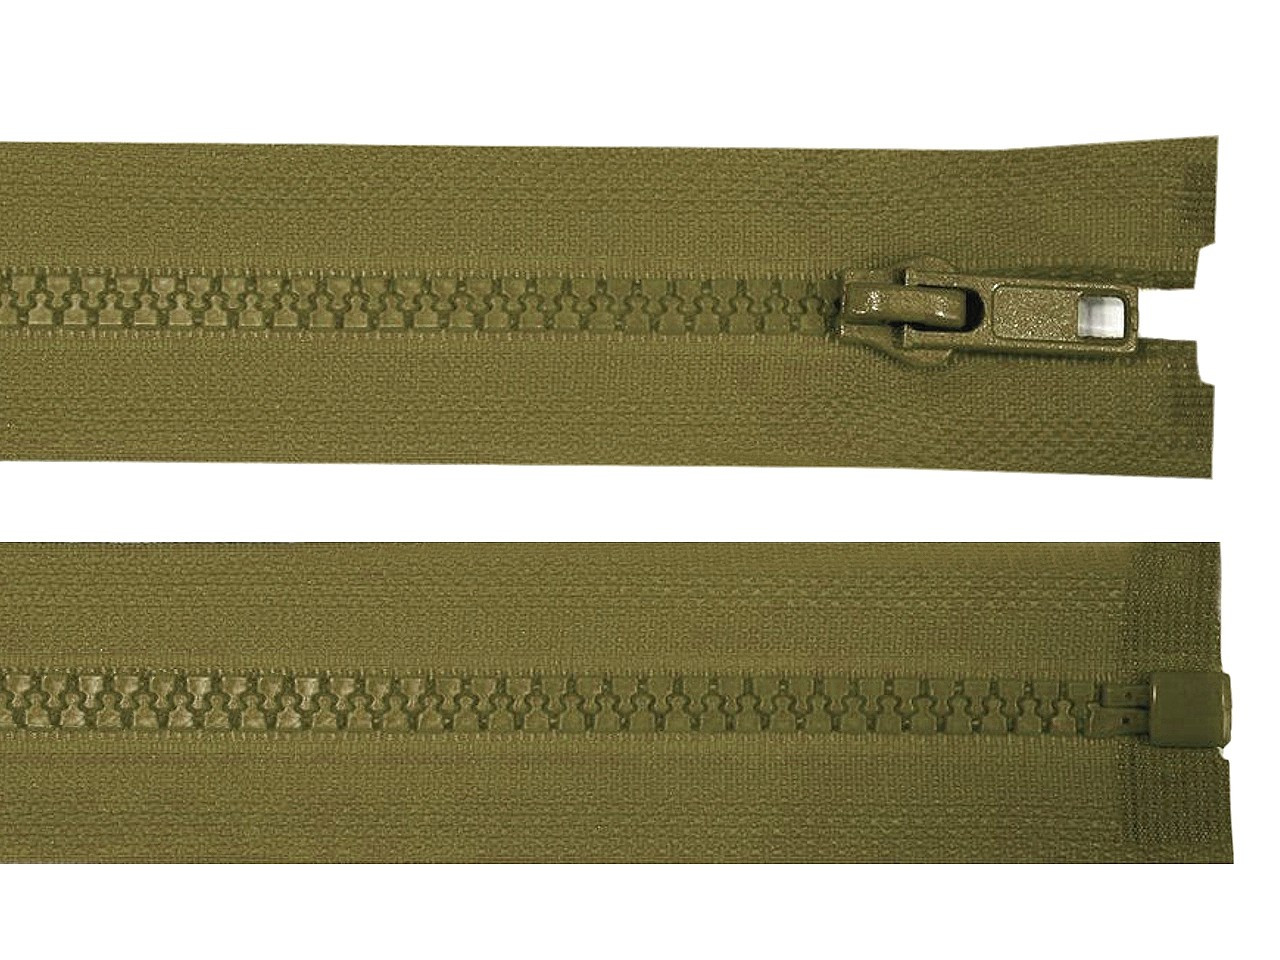 Kostěný zip No 5 délka 75 cm bundový, barva 298 zelená khaki tmavá